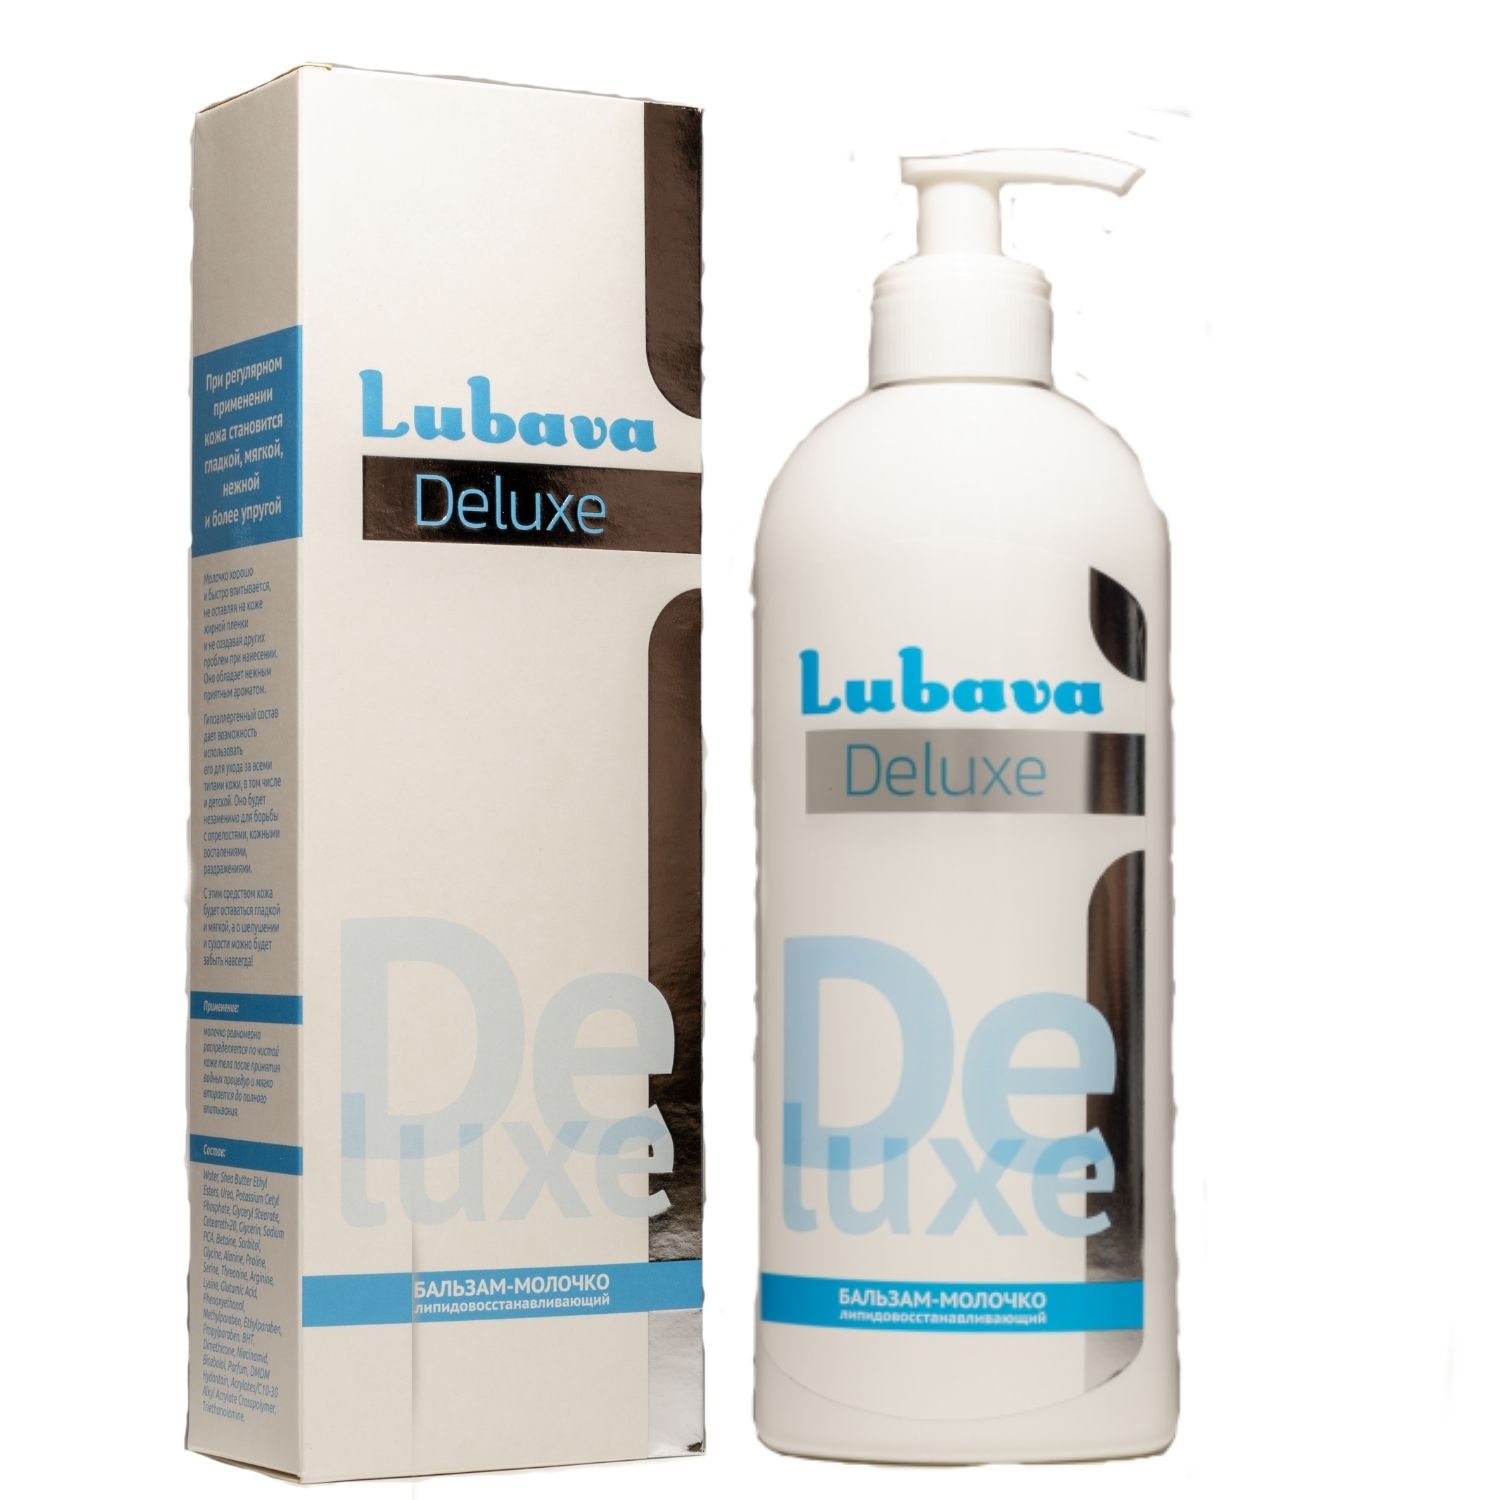 Lubava Deluxe бальзам-молочко для тела 370 мл., Средства для ухода за кожей, Lubava Deluxe